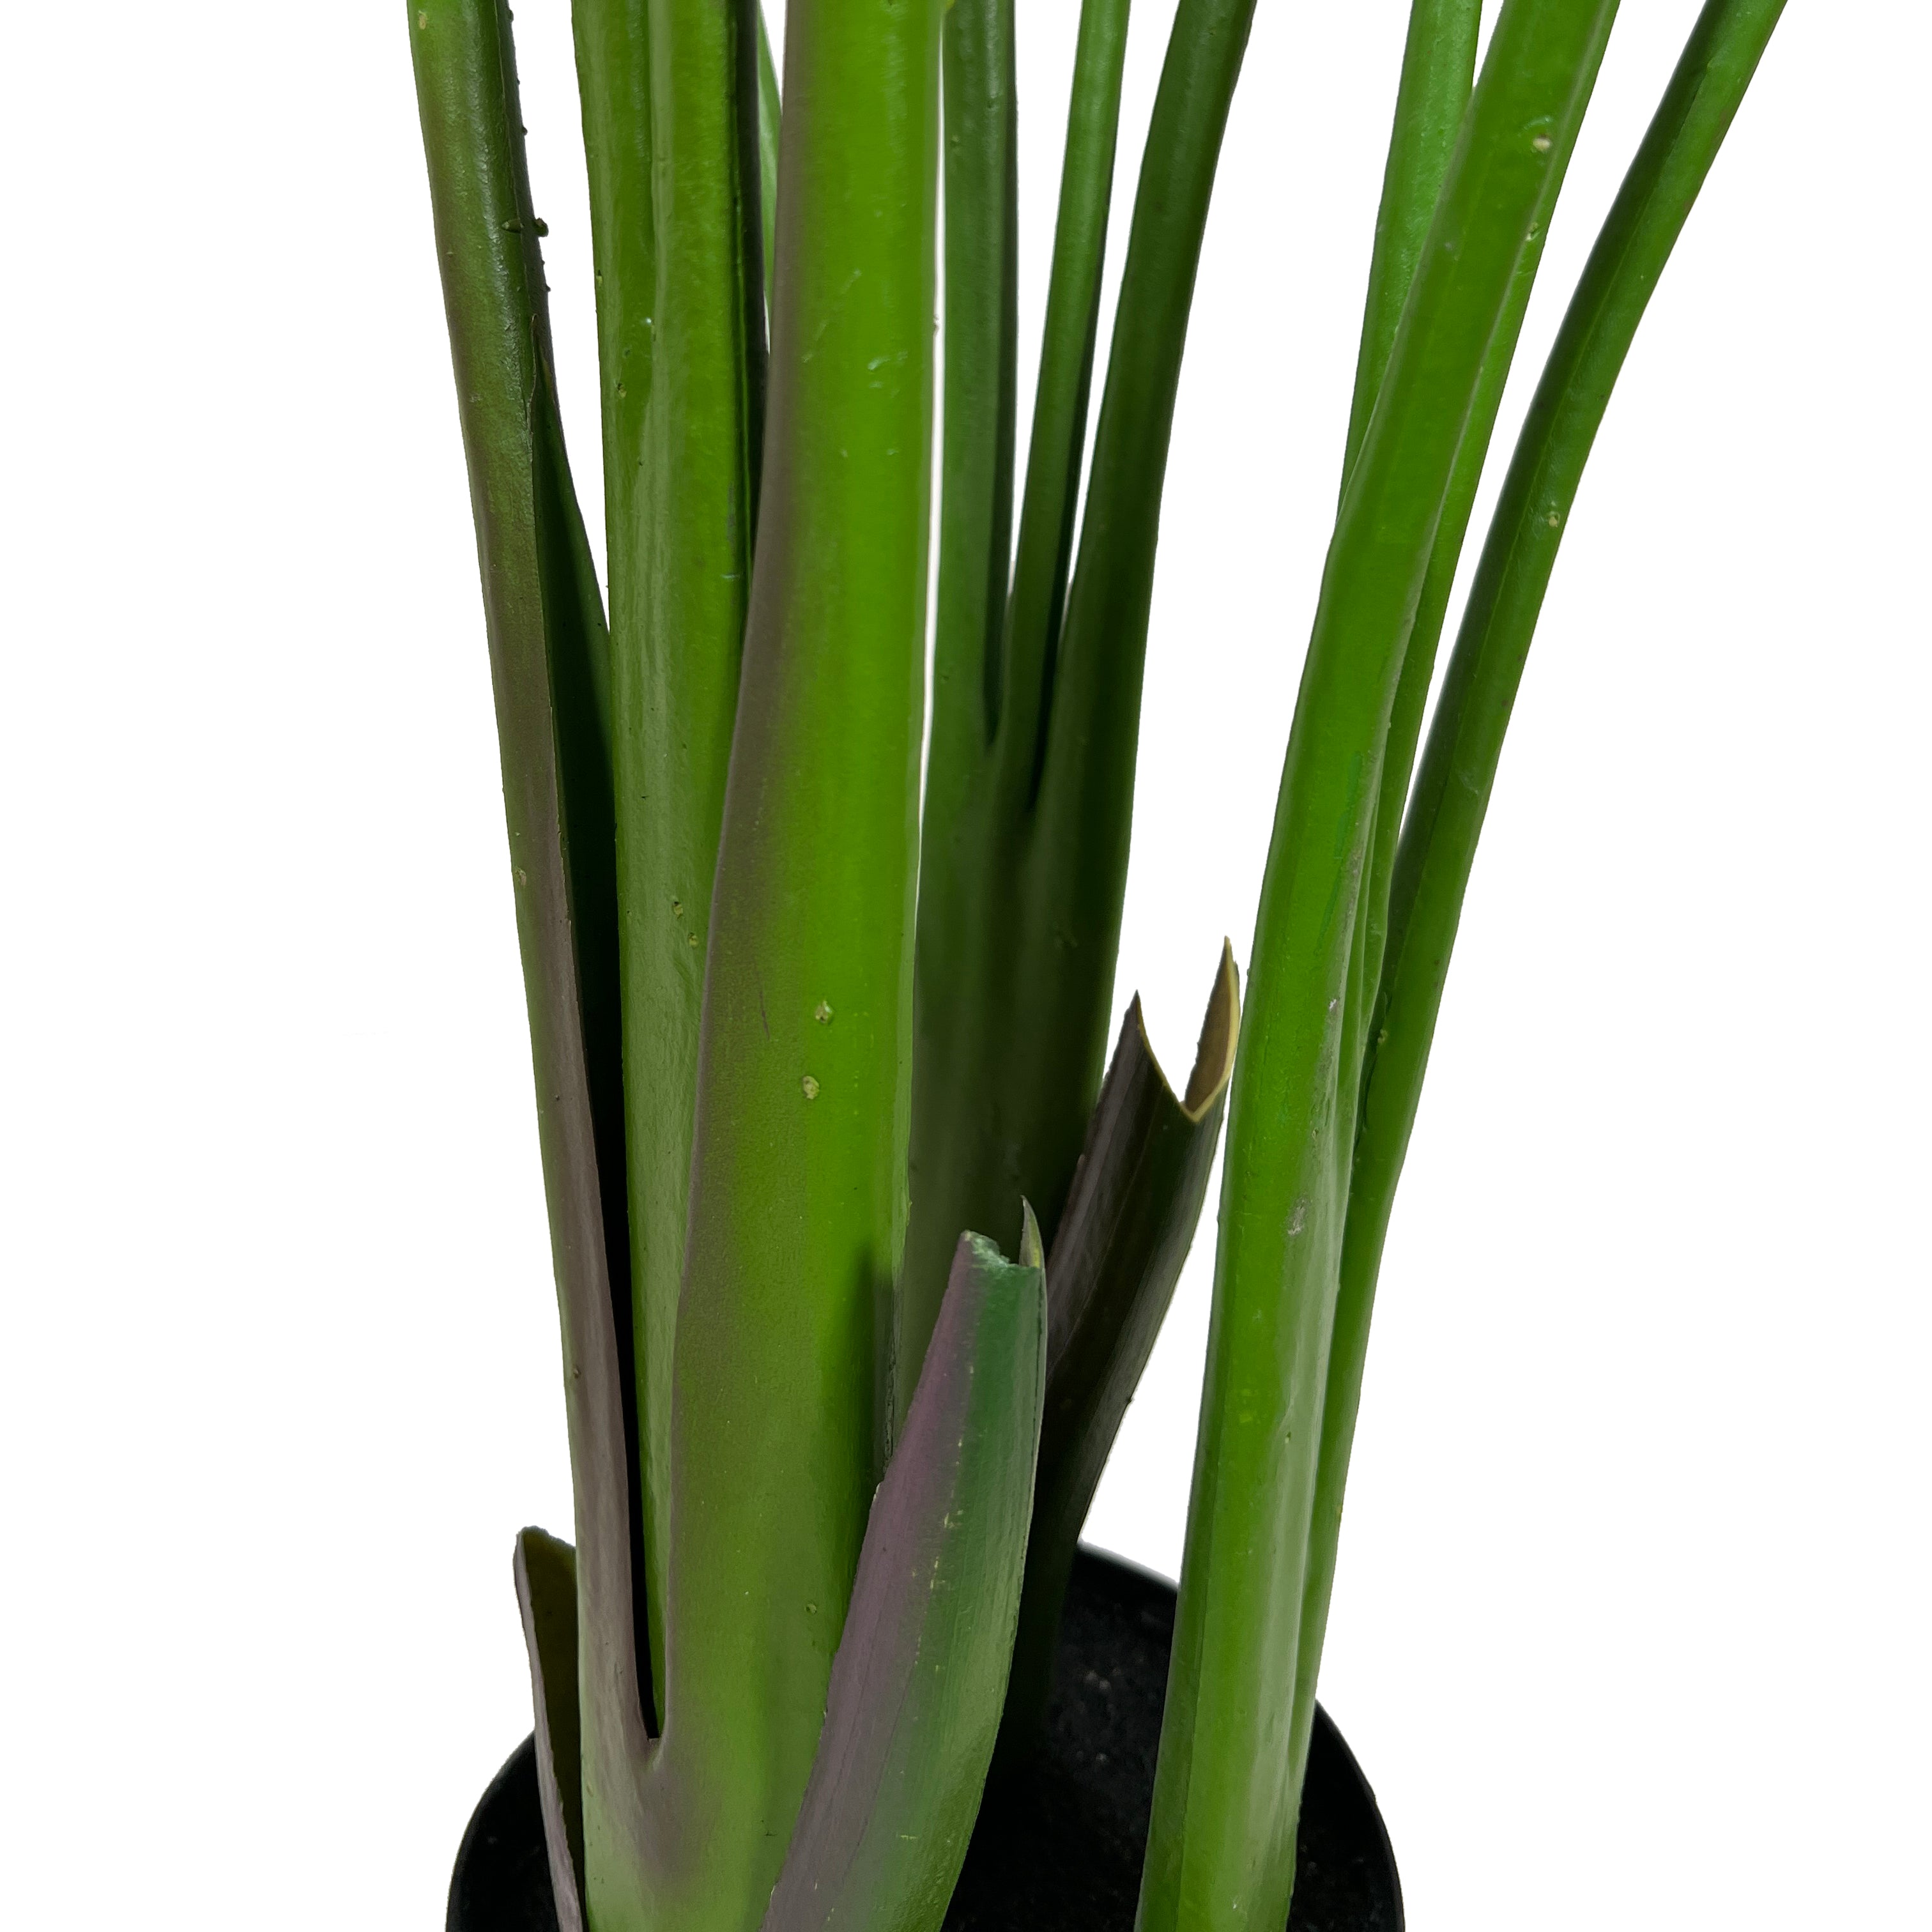 Kopu® Kunstplant Strelitzia Nicolai 160 cm Paradijsvogelplant 10 blad